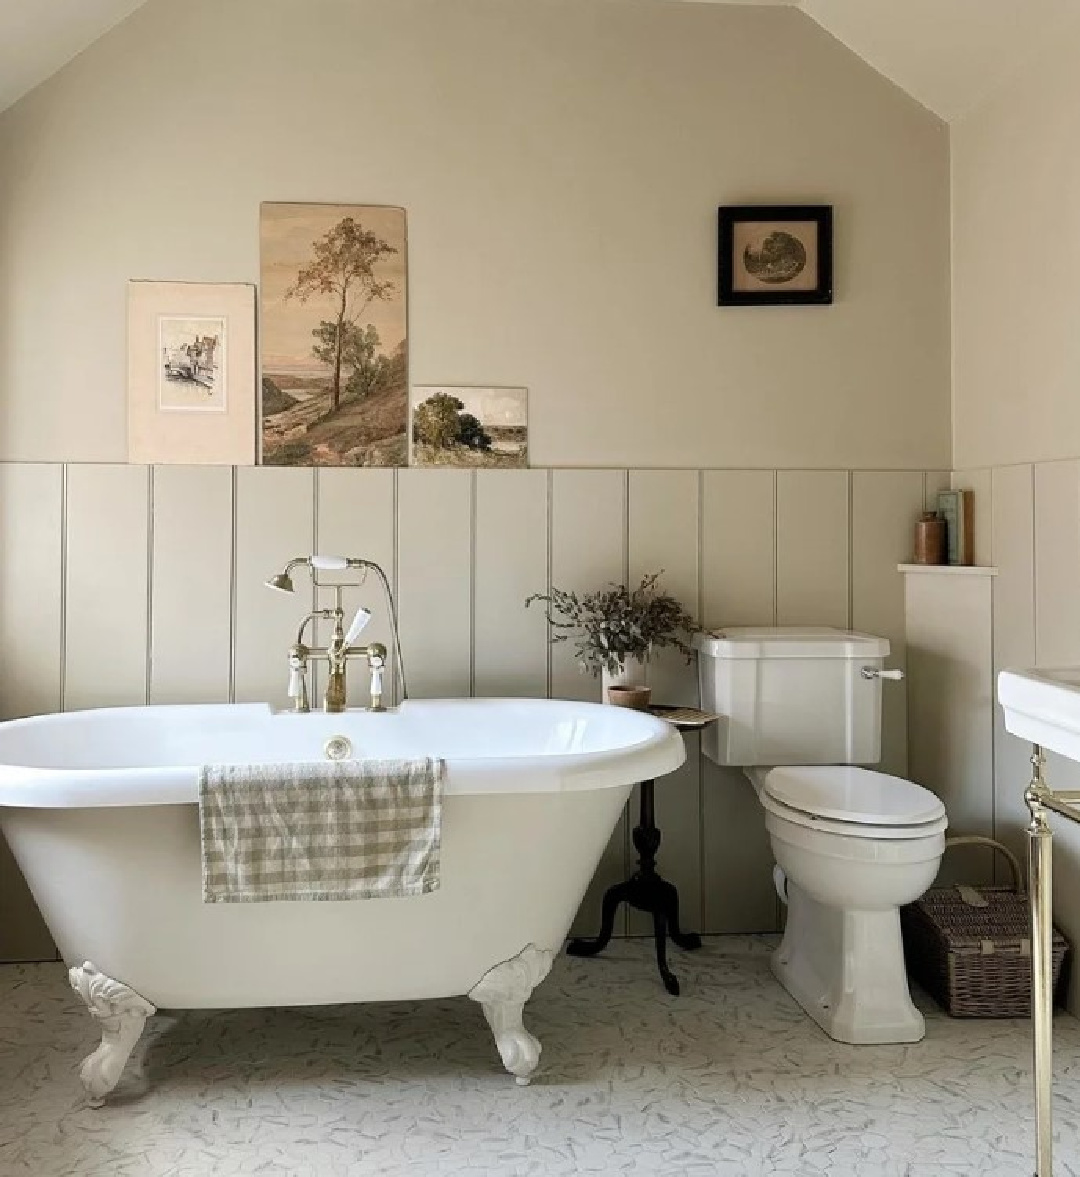 Farrow & Ball Old White paint in English country bathroom with clawfoot tub and vintage sepia artwork - @harnhamhouse. #oldwhite #farrowandballoldwhite